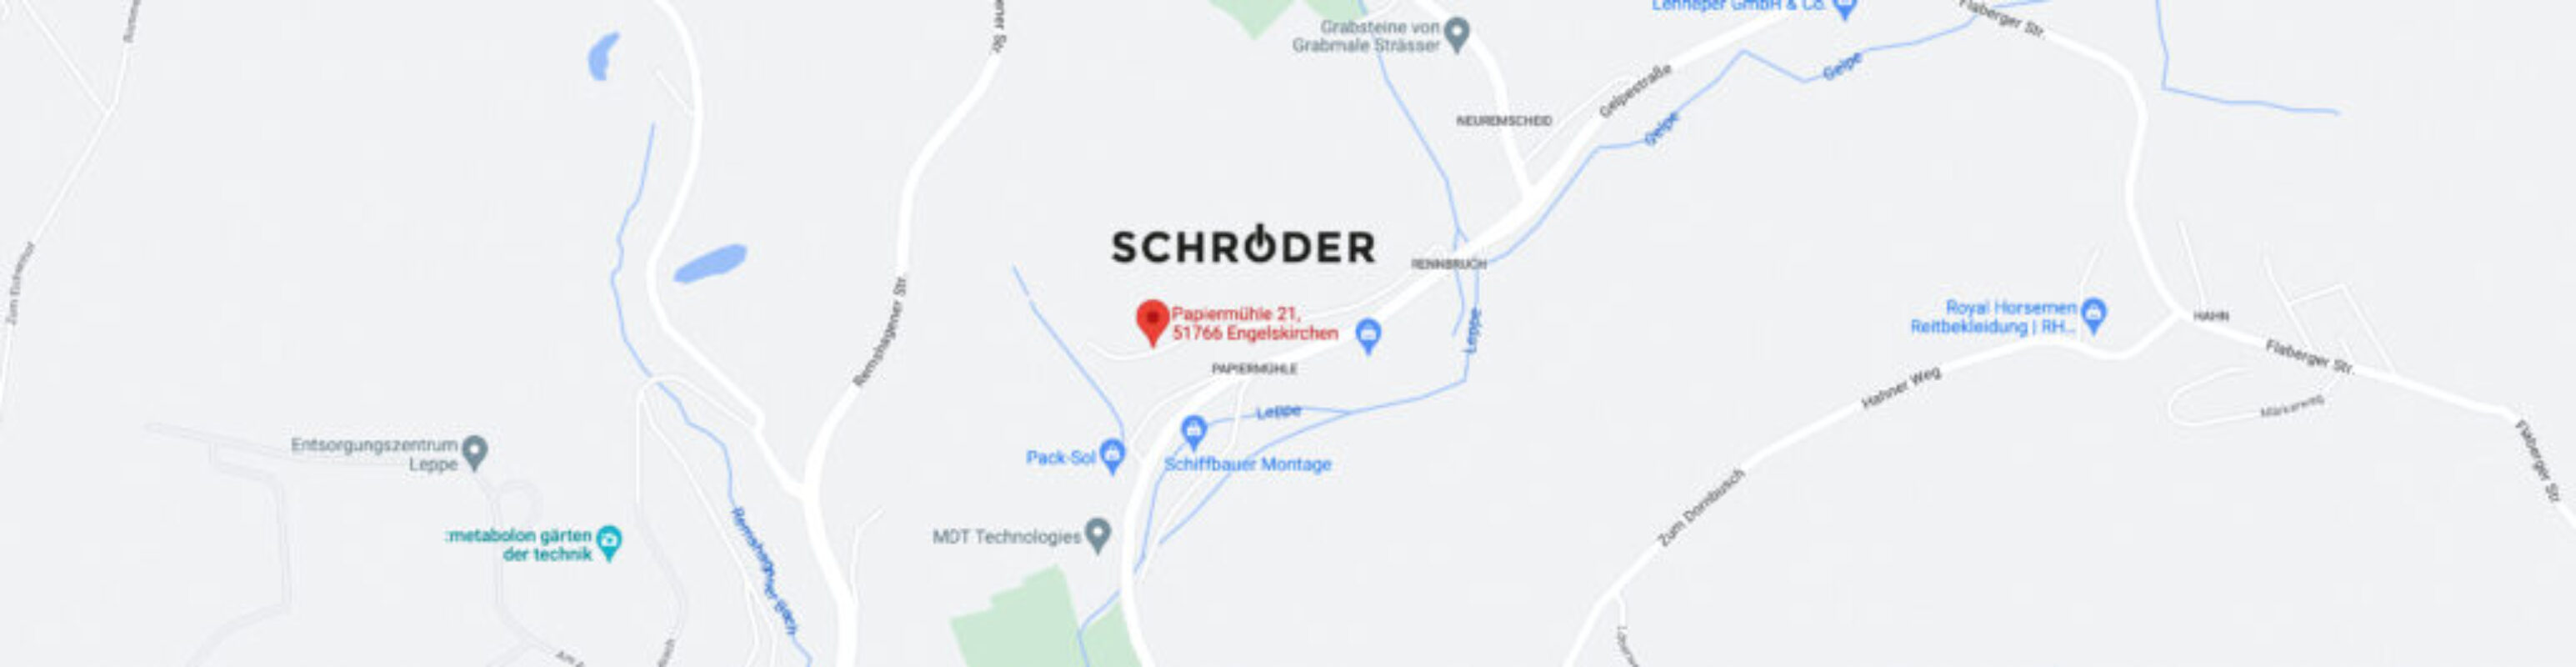 Schröder_Karte